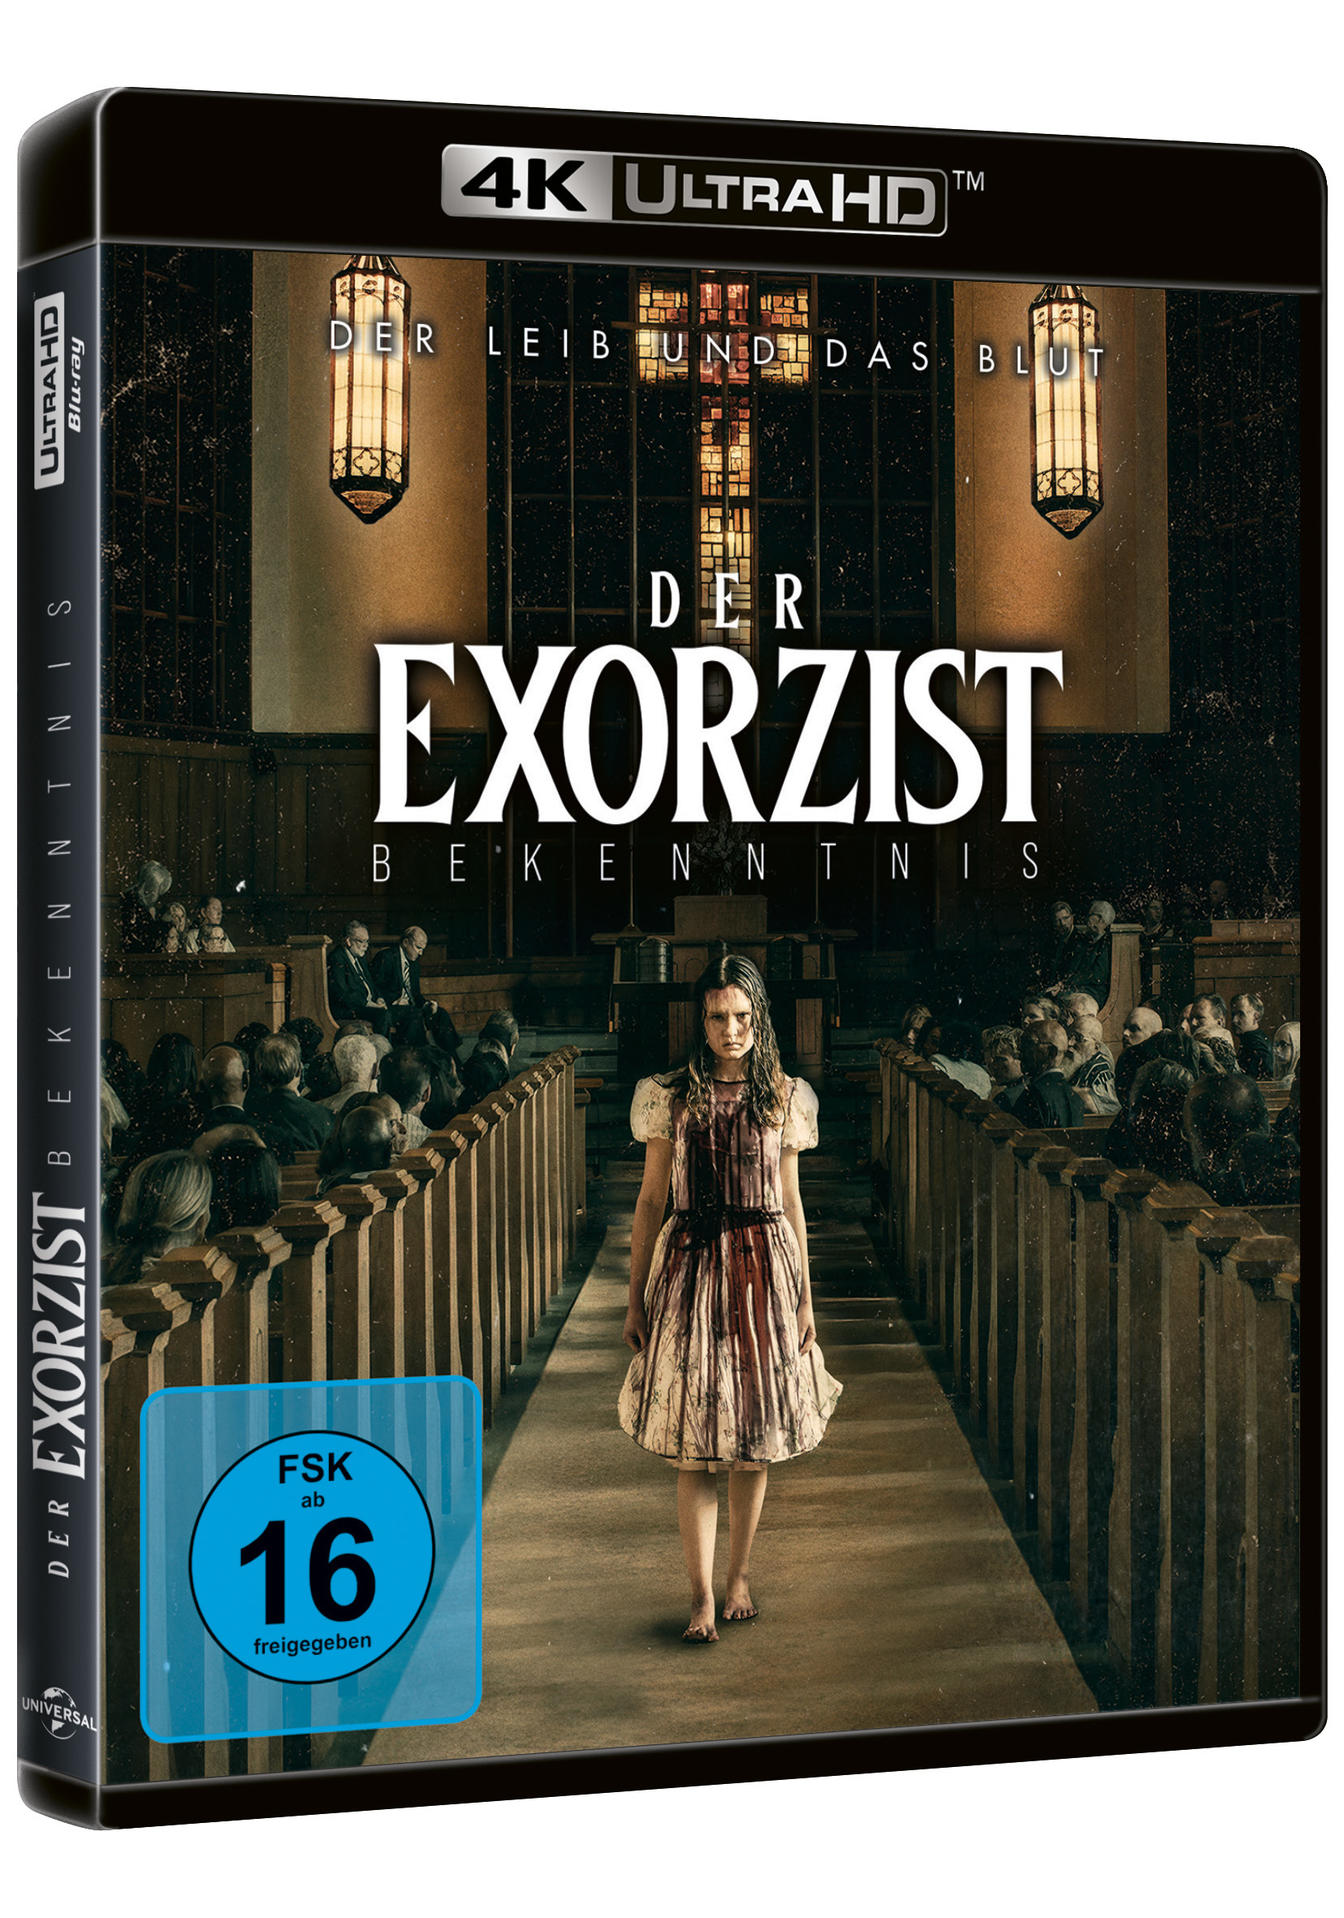 HD Blu-ray Bekenntnis Exorzist: 4K Der Ultra